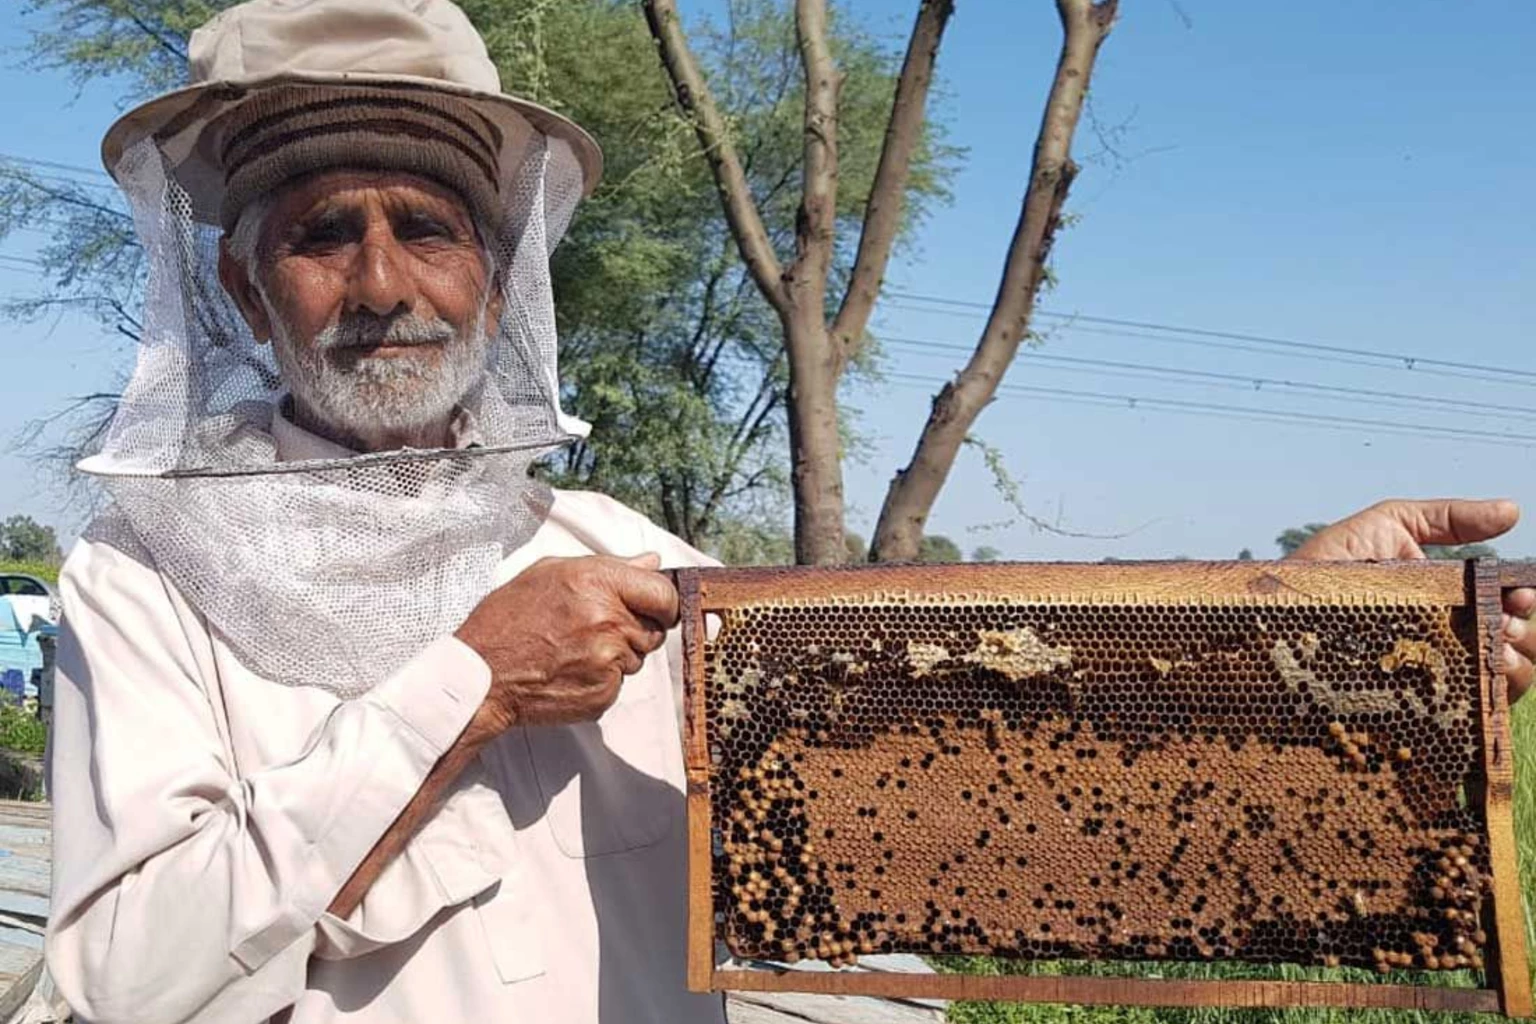 Beekeeper in Pakistan